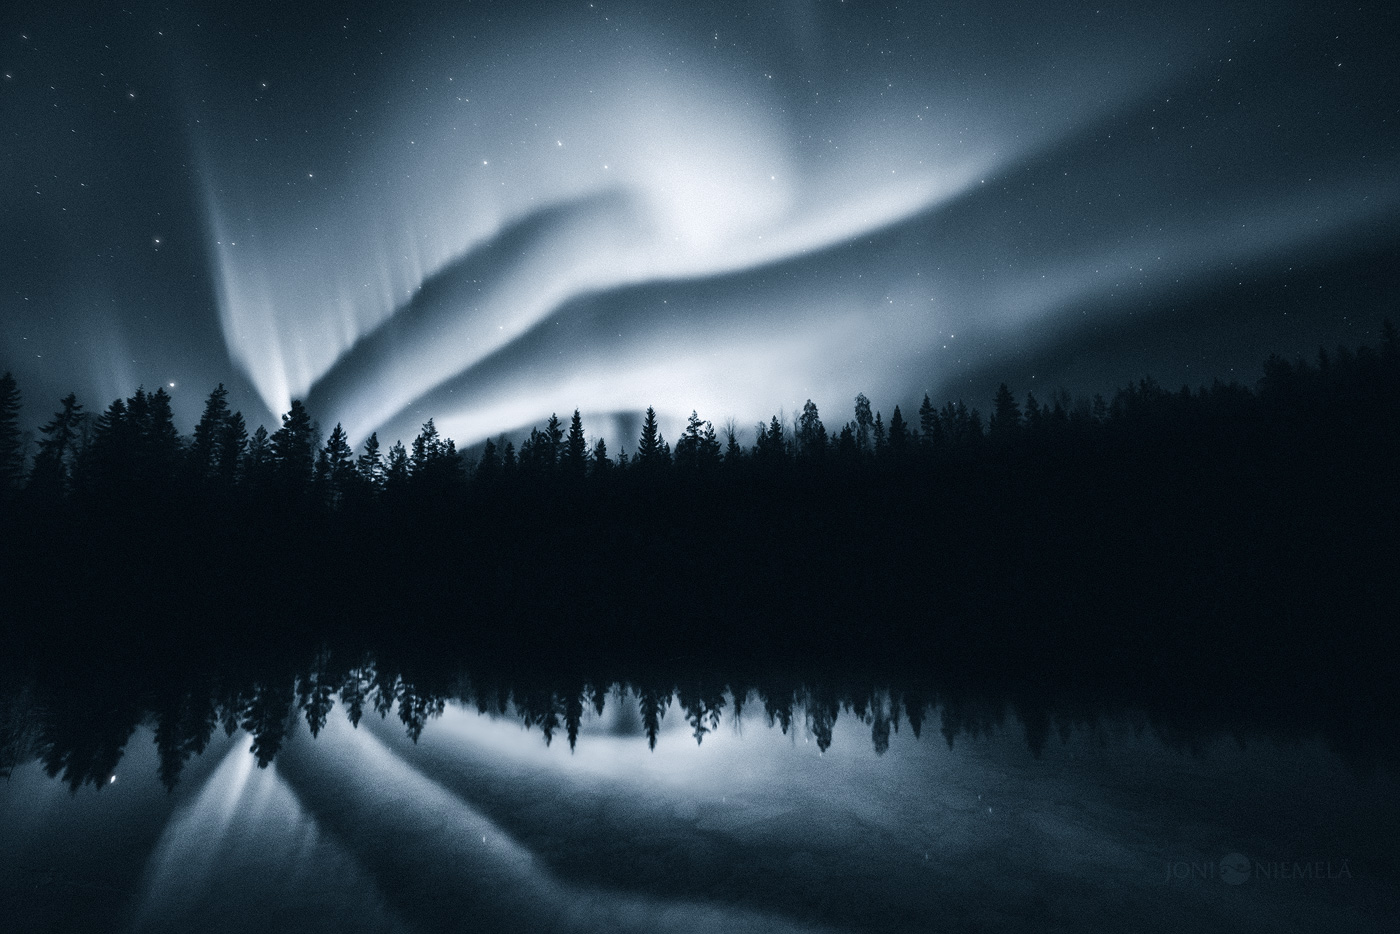 White Flames: The Aurora Borealis in Monochrome